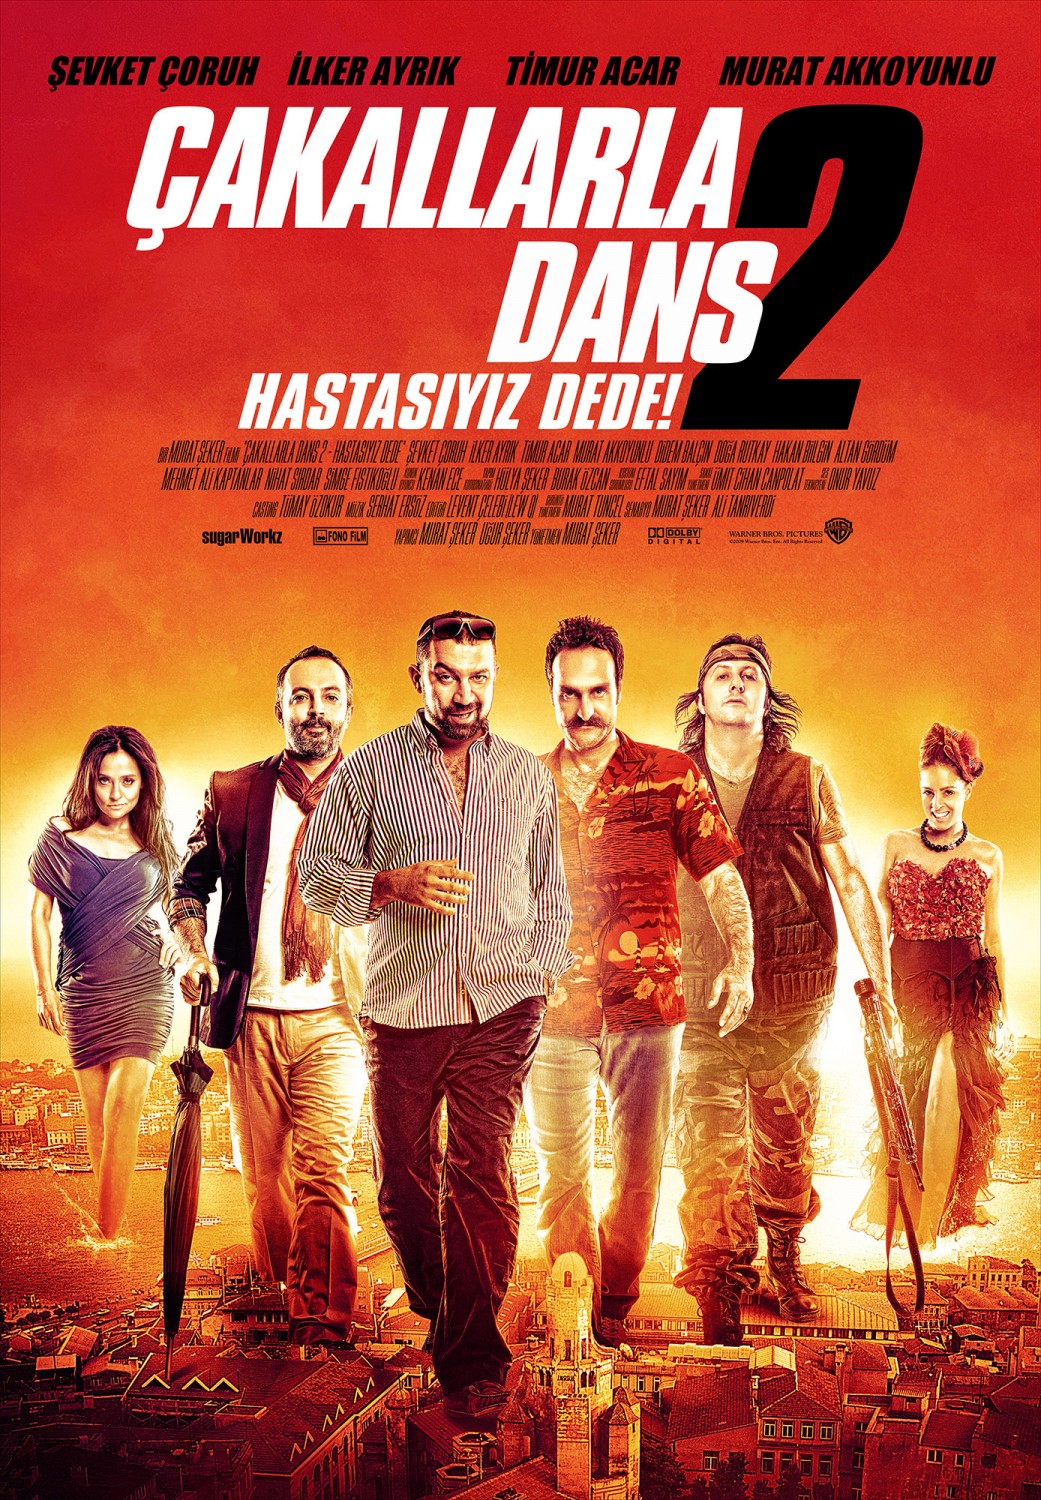 Extra Large Movie Poster Image for Çakallarla dans 2 (#1 of 9)